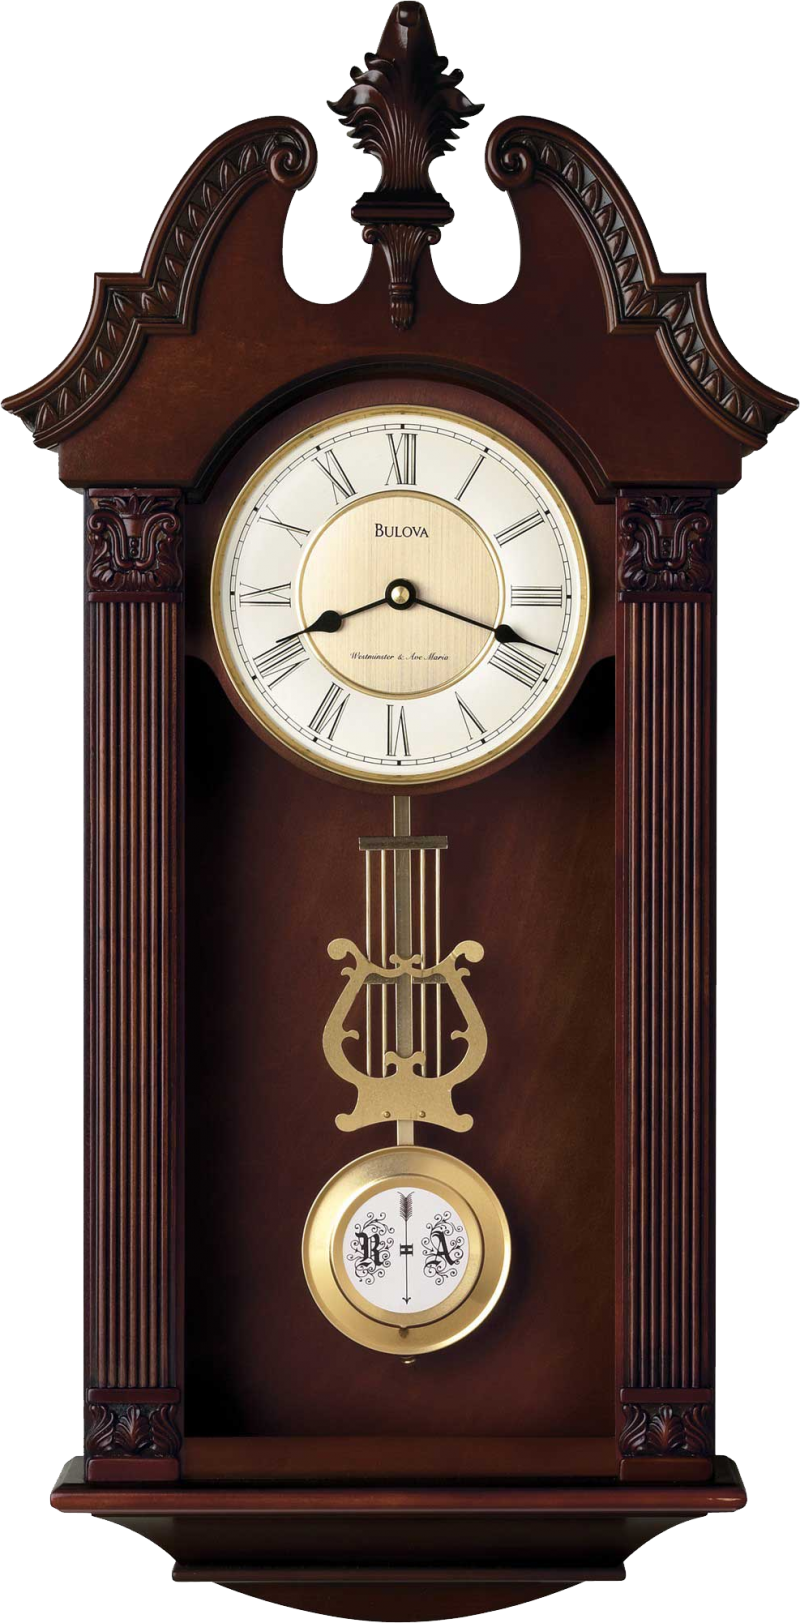 Wall Bell Clock PNG Image - PurePNG | Free transparent CC0 ...